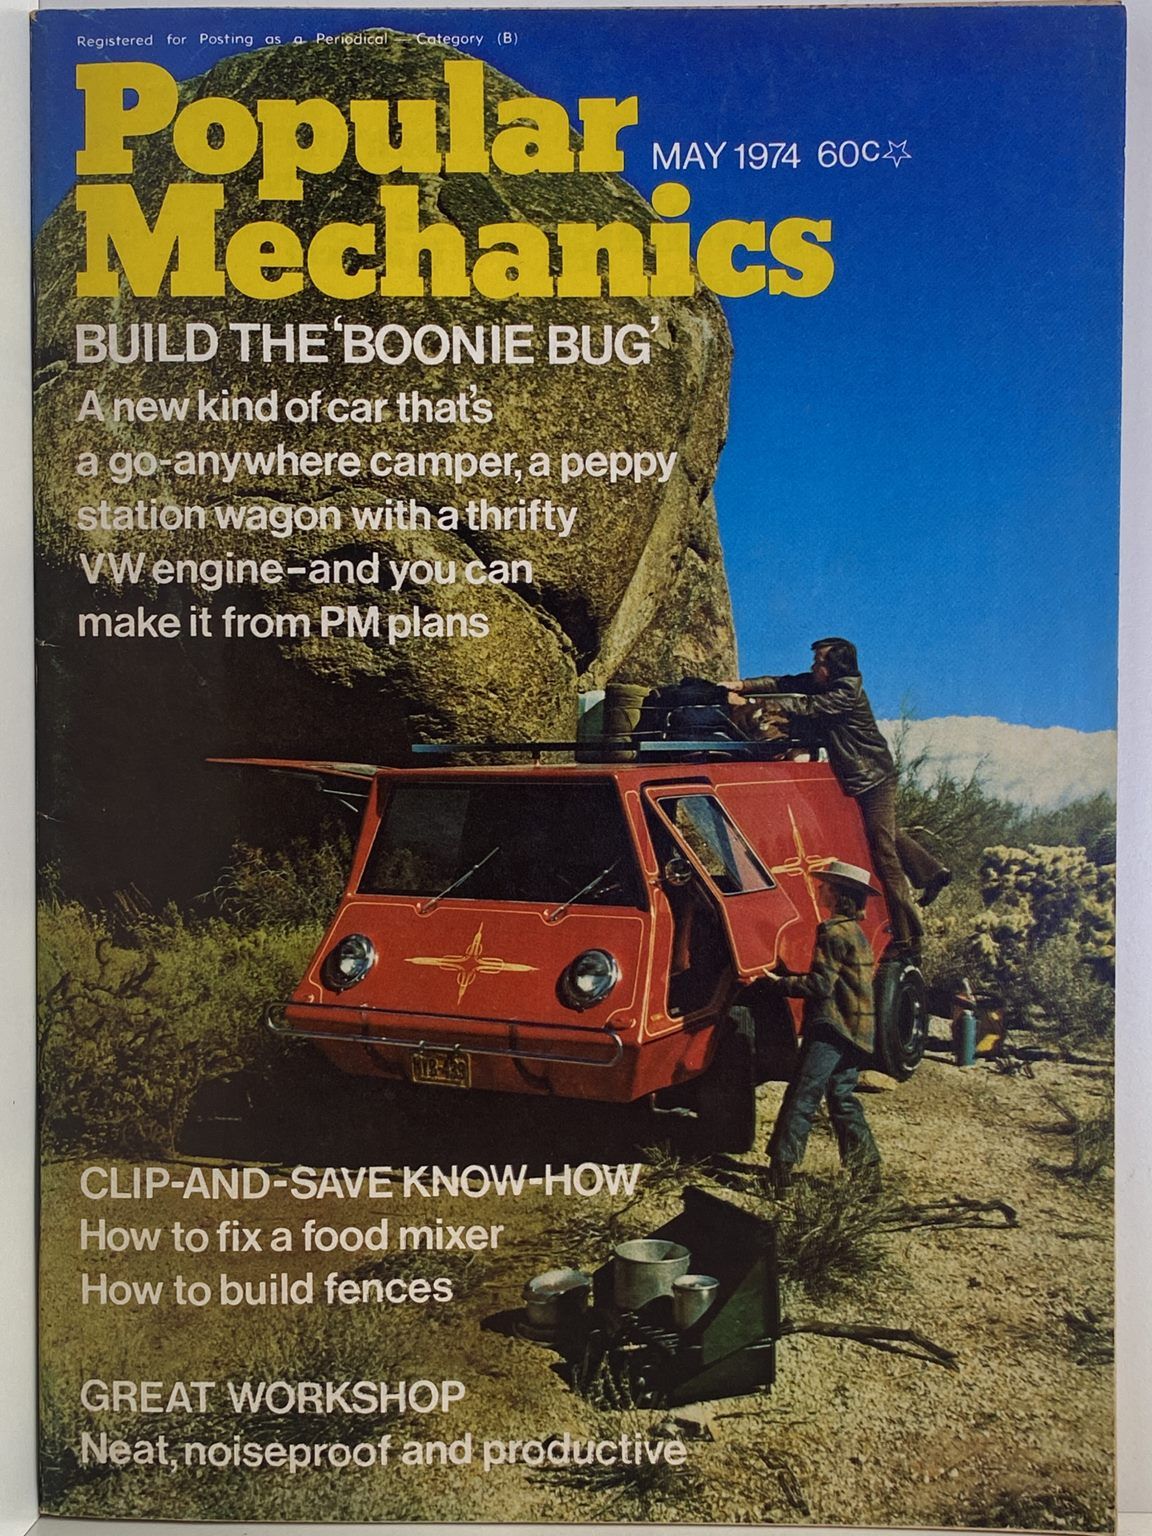 VINTAGE MAGAZINE: Popular Mechanics - Vol. 141, No. 3 - May 1974